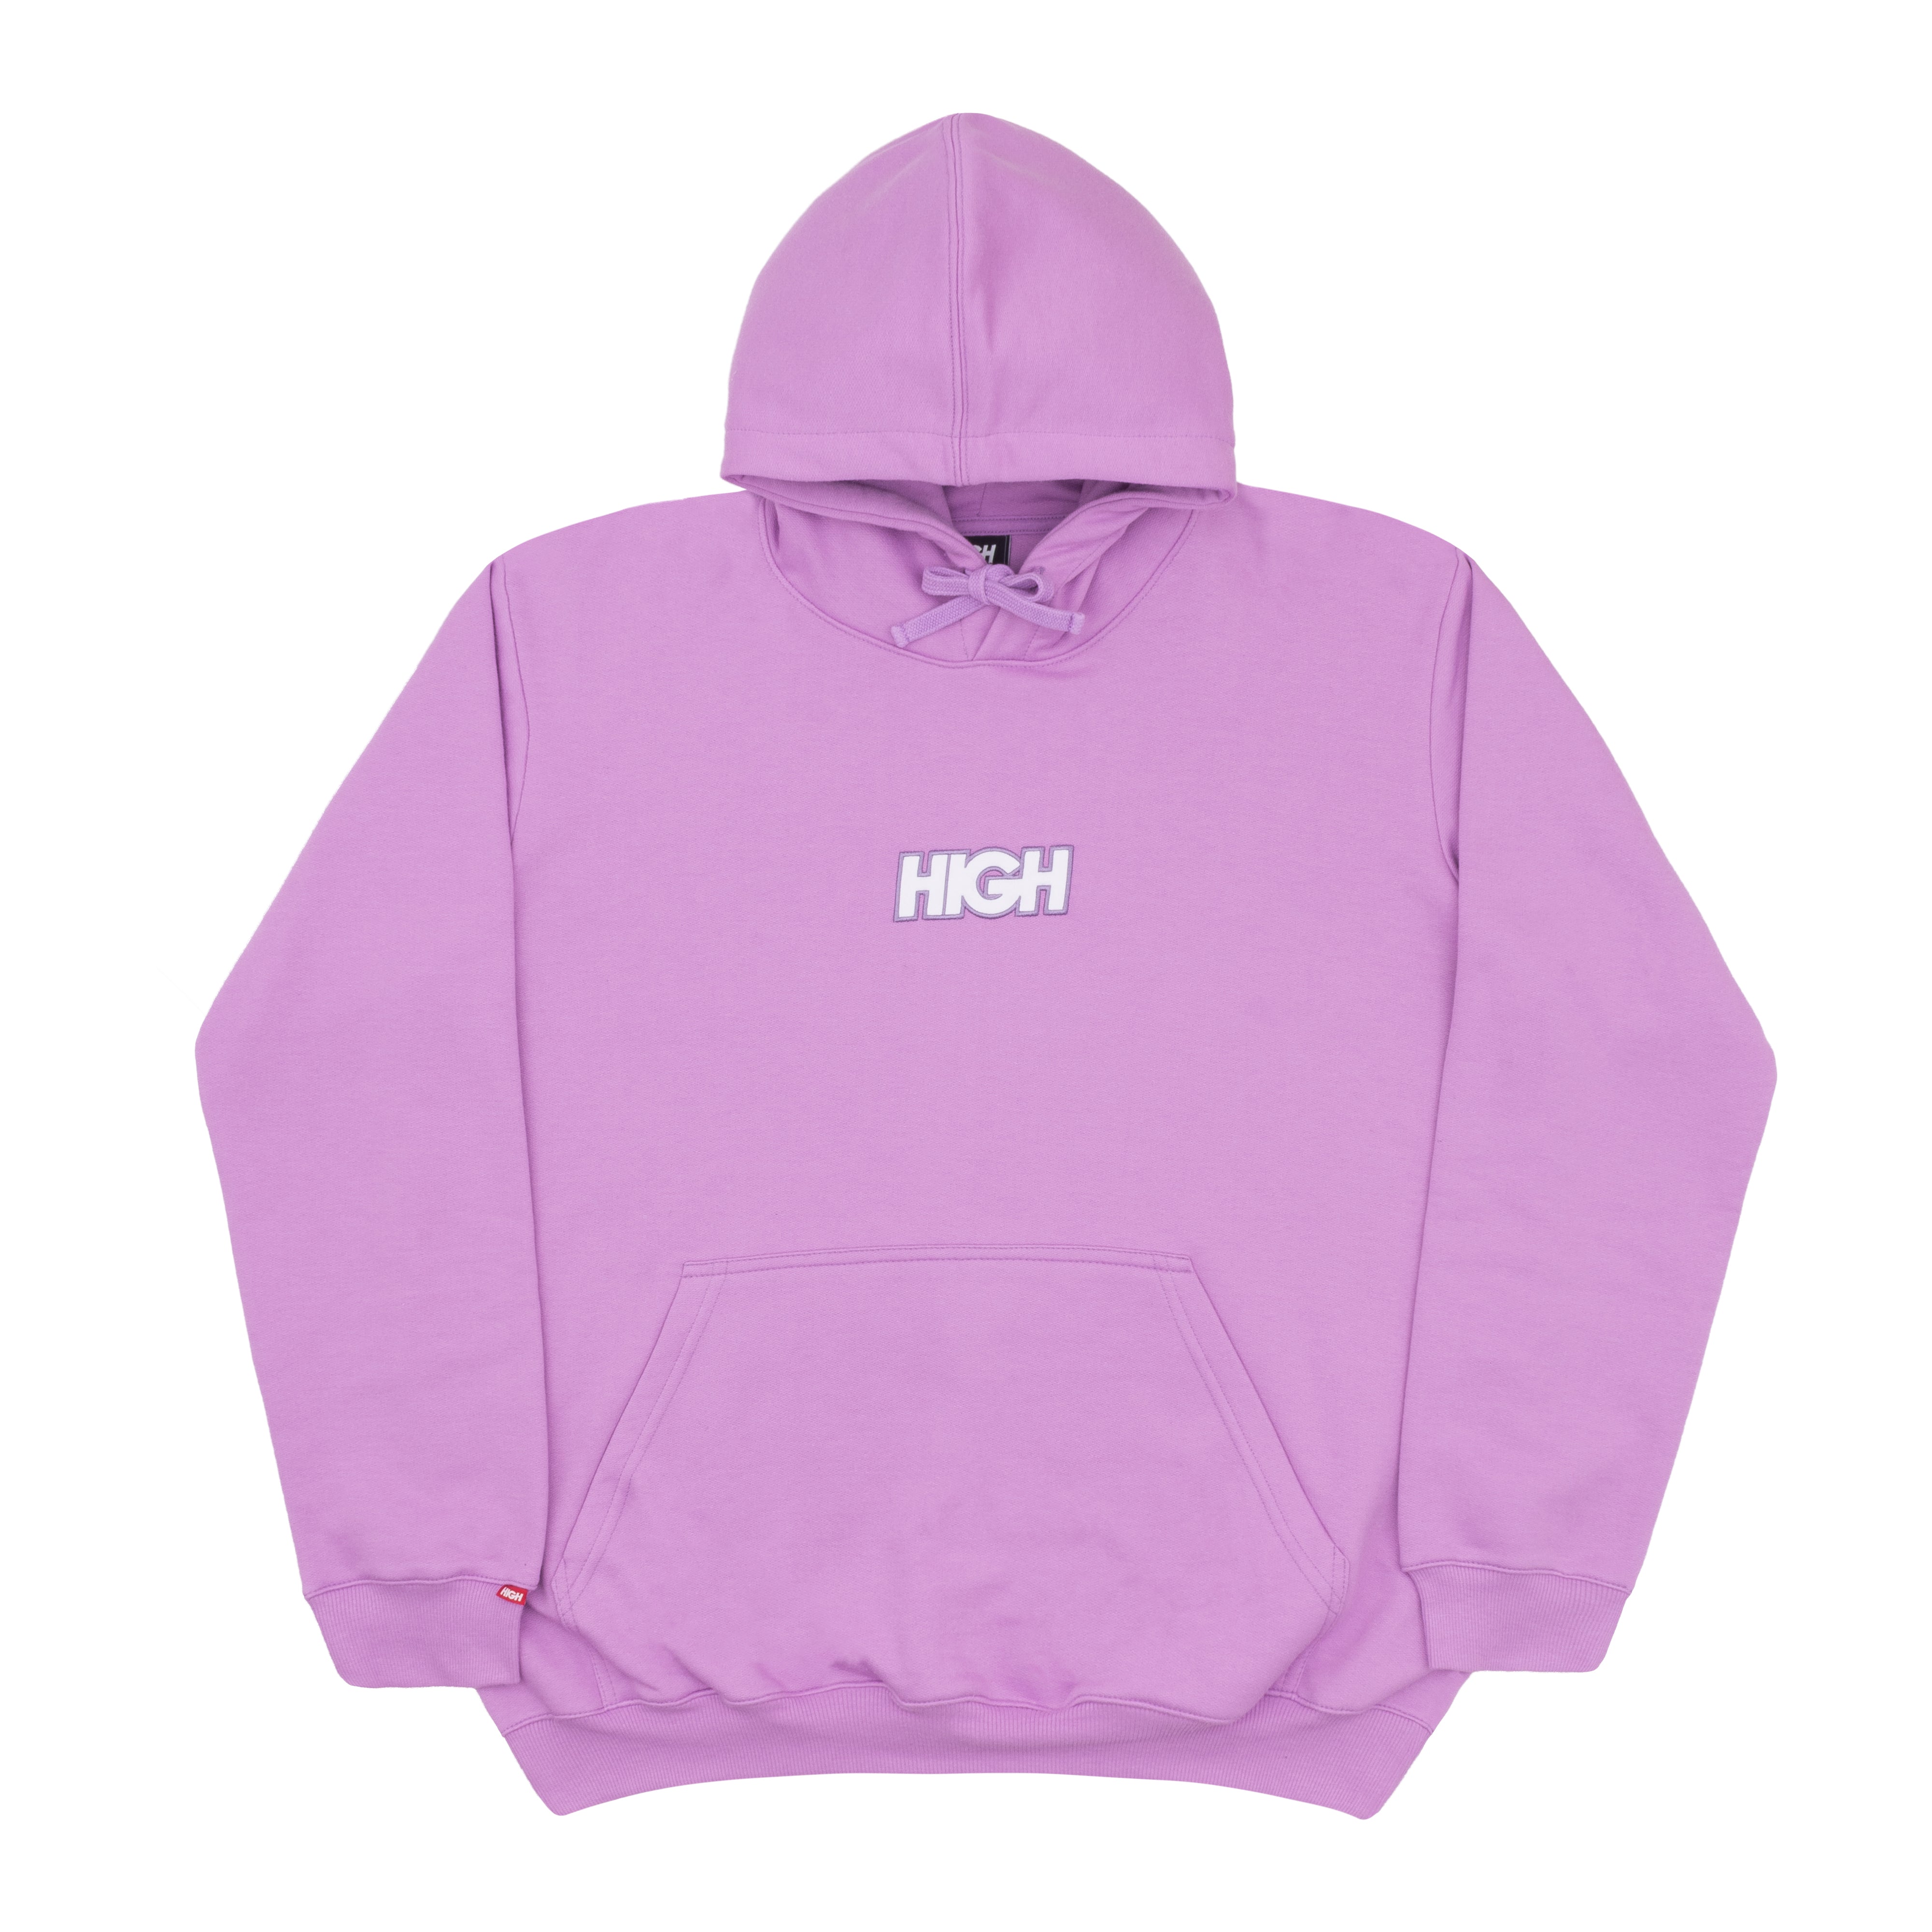 HIGH - Hoodie Logo Light Lilac